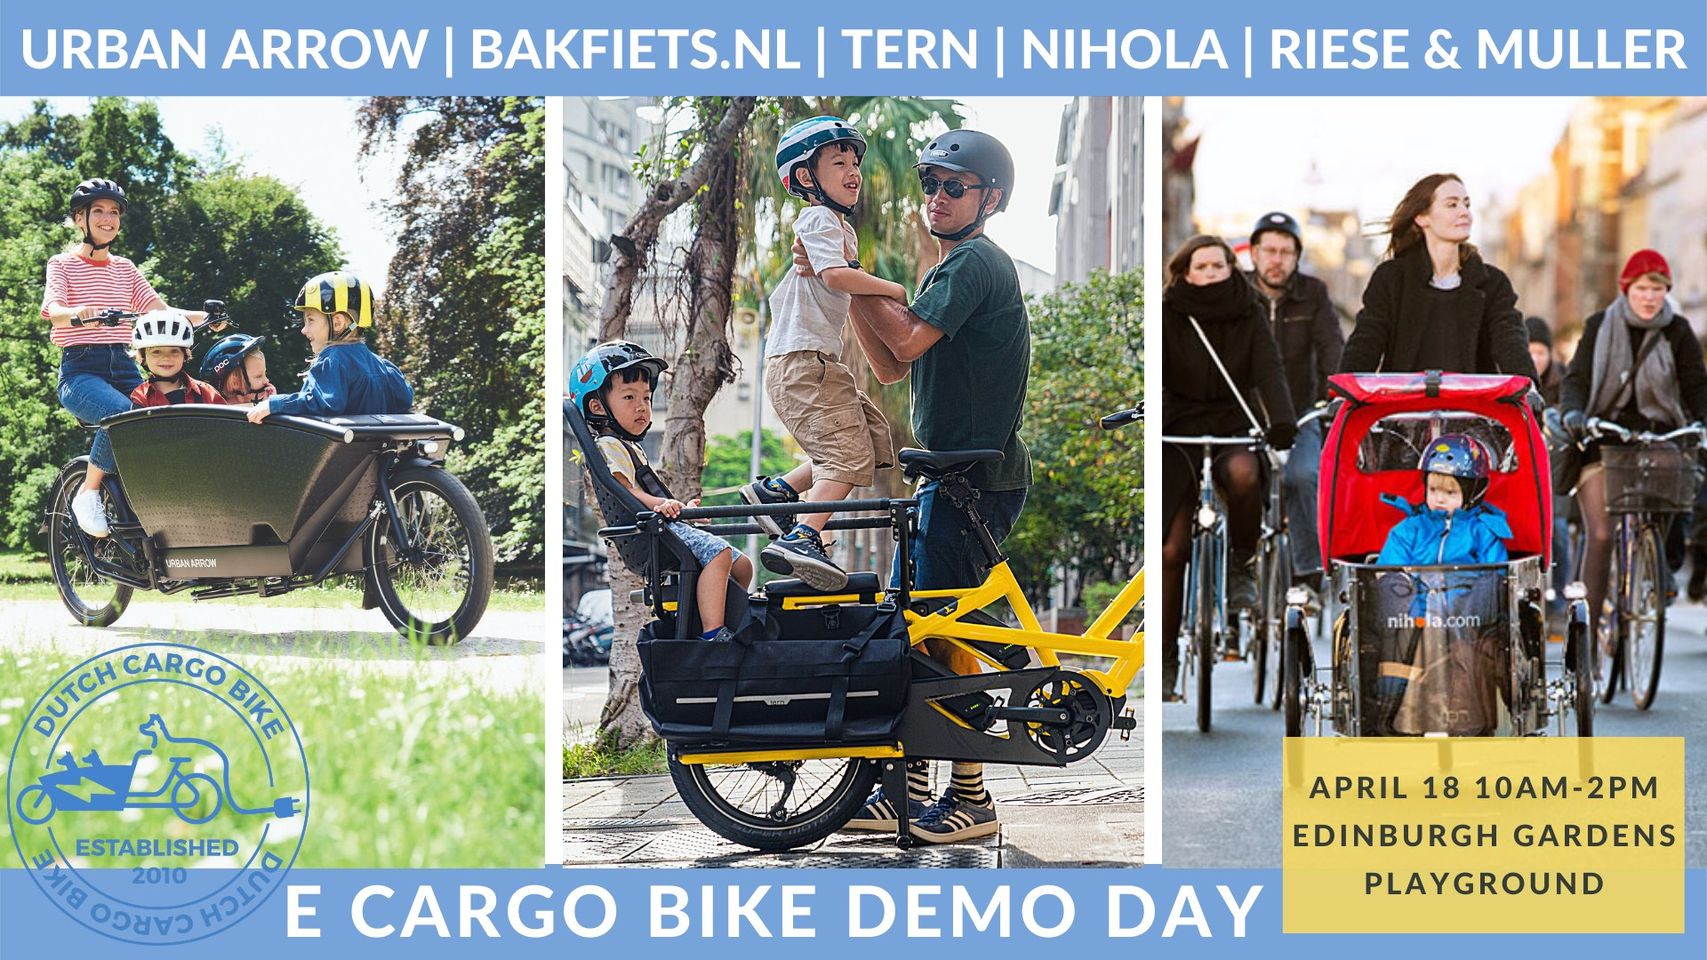 E Cargo Bike Demo Day at Edinburgh Gardens in North Fitzroy, 10am - 2pm, Sunday 18th April 2021